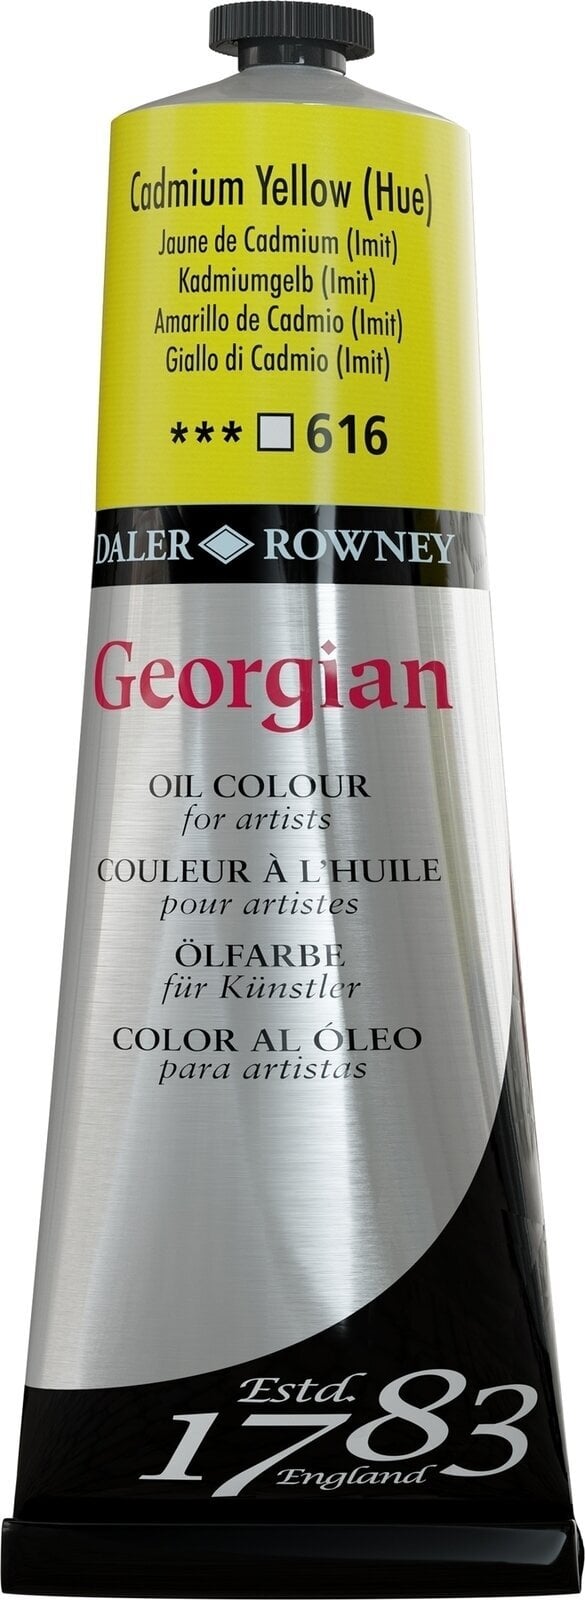 Oil colour Daler Rowney Georgian Oil Paint Cadmium Yellow Hue 225 ml 1 pc